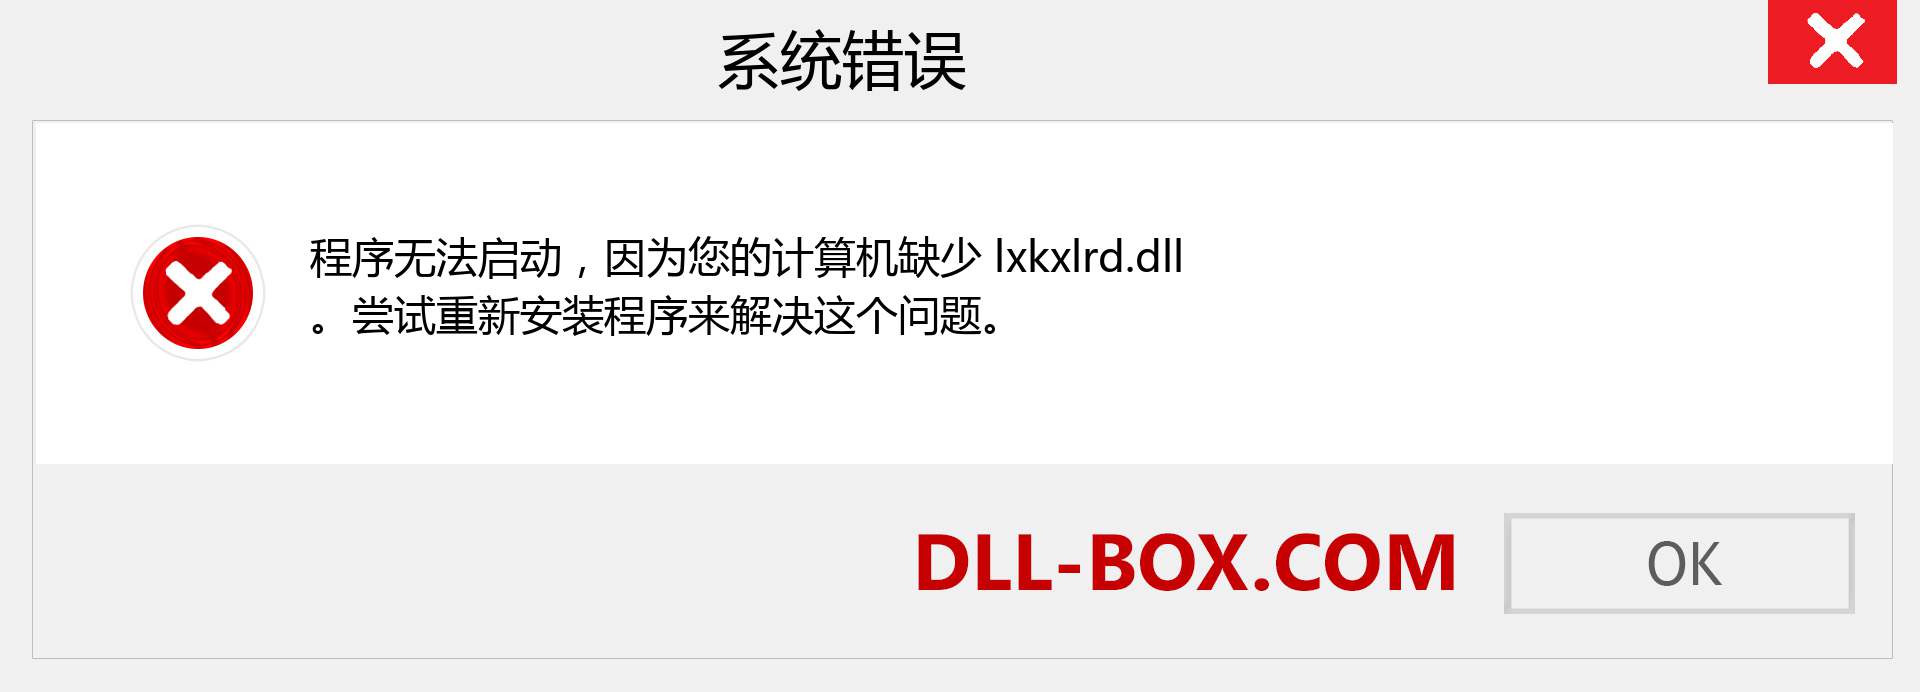 lxkxlrd.dll 文件丢失？。 适用于 Windows 7、8、10 的下载 - 修复 Windows、照片、图像上的 lxkxlrd dll 丢失错误